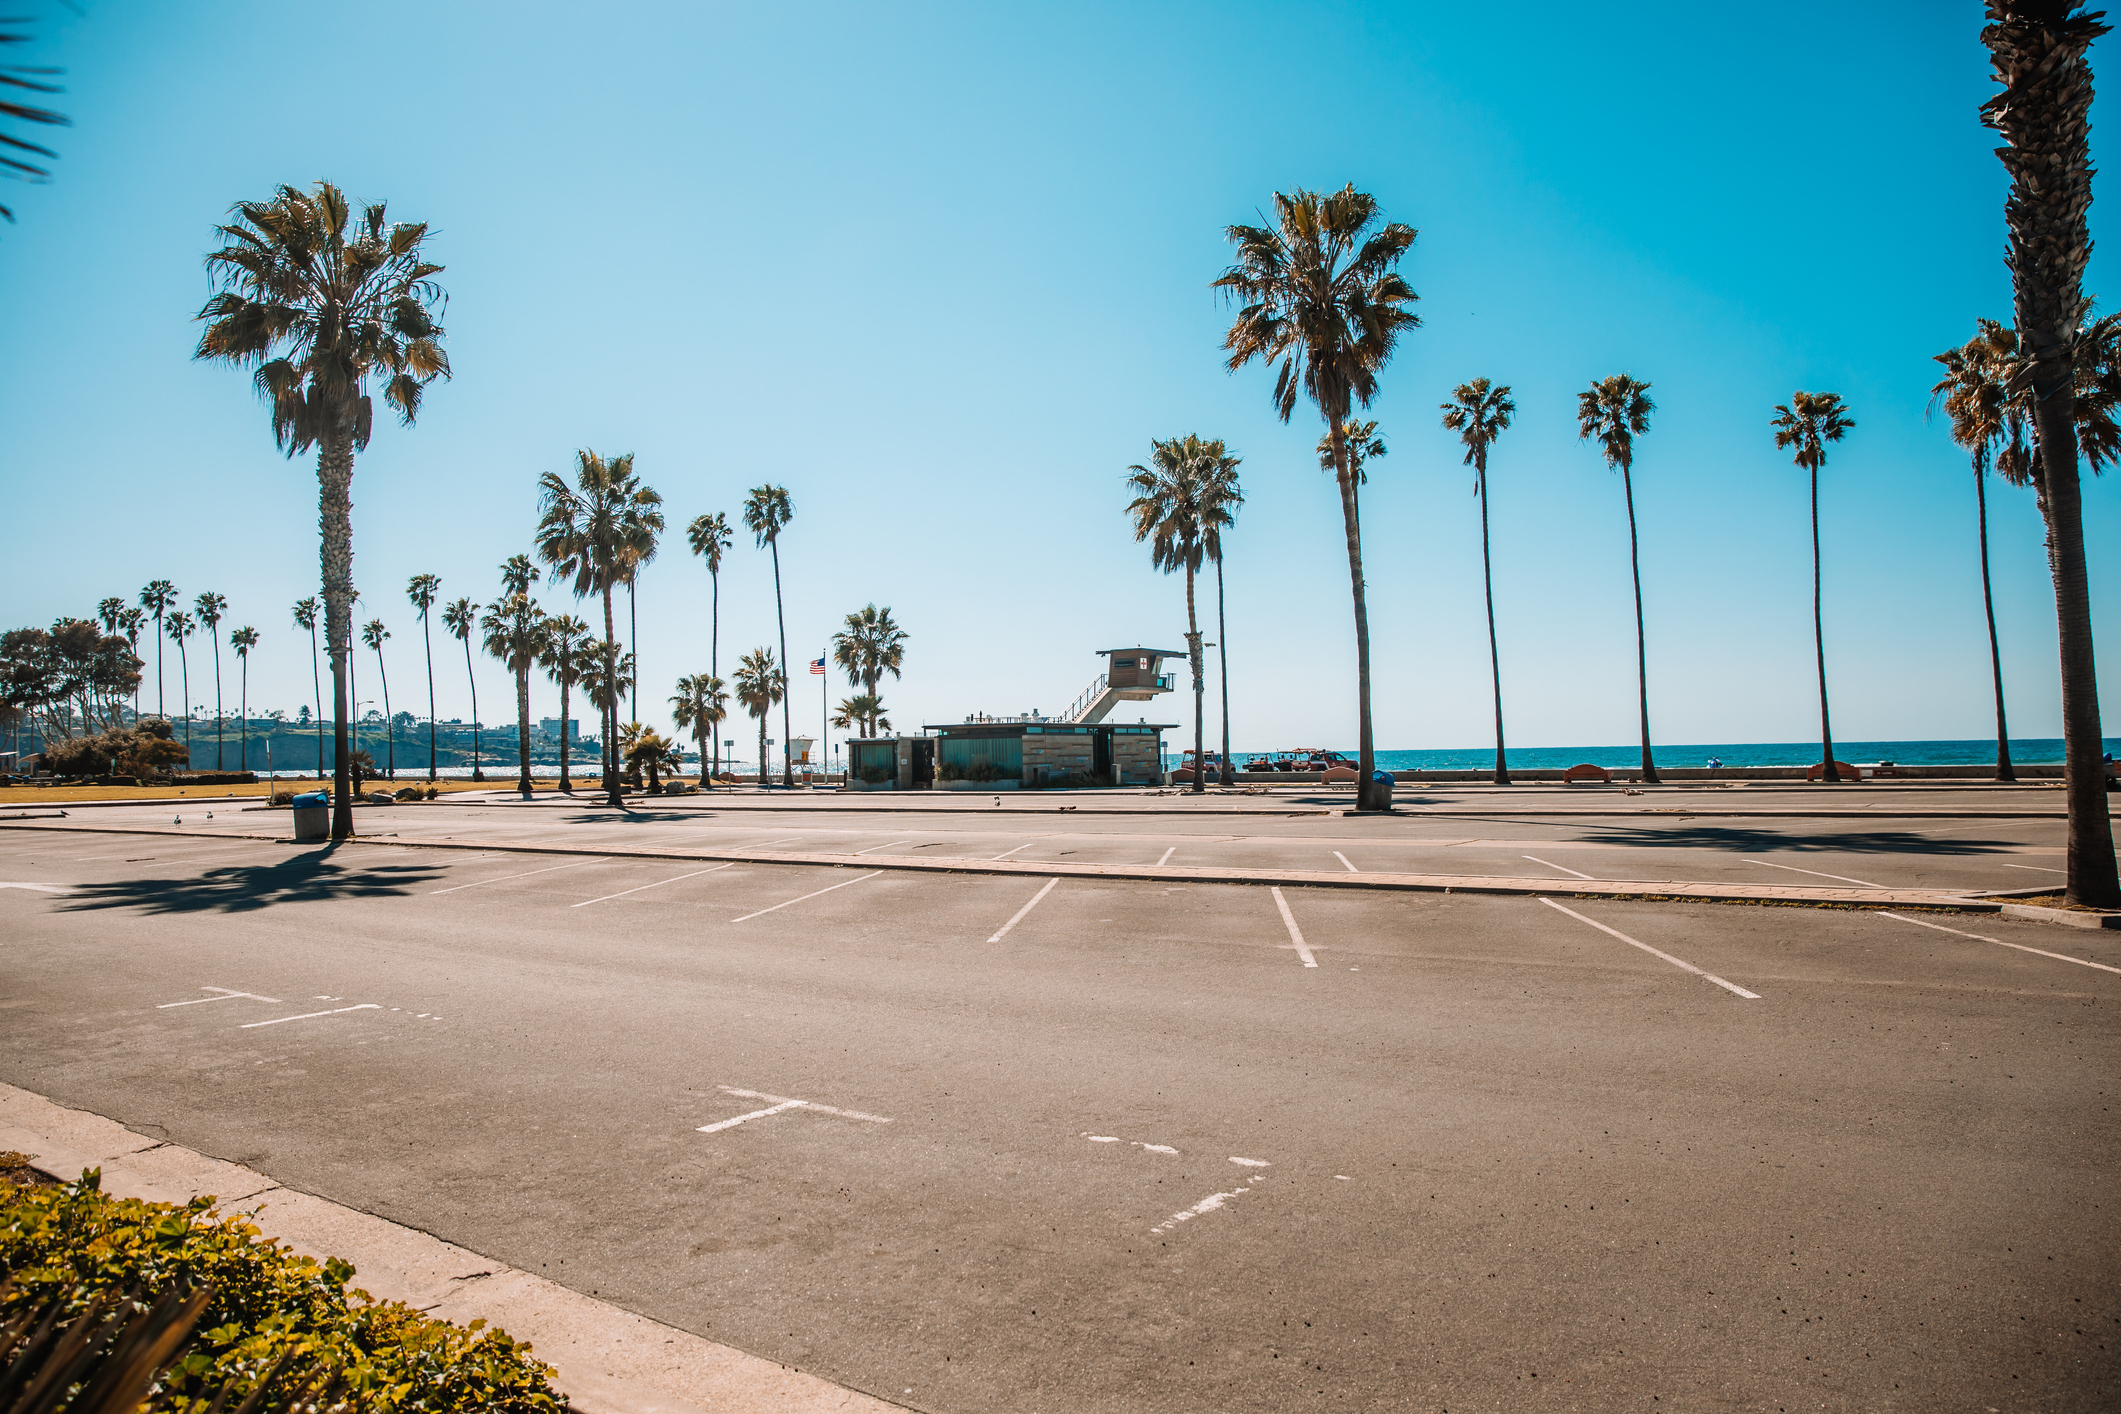 San Diego Parking Lot